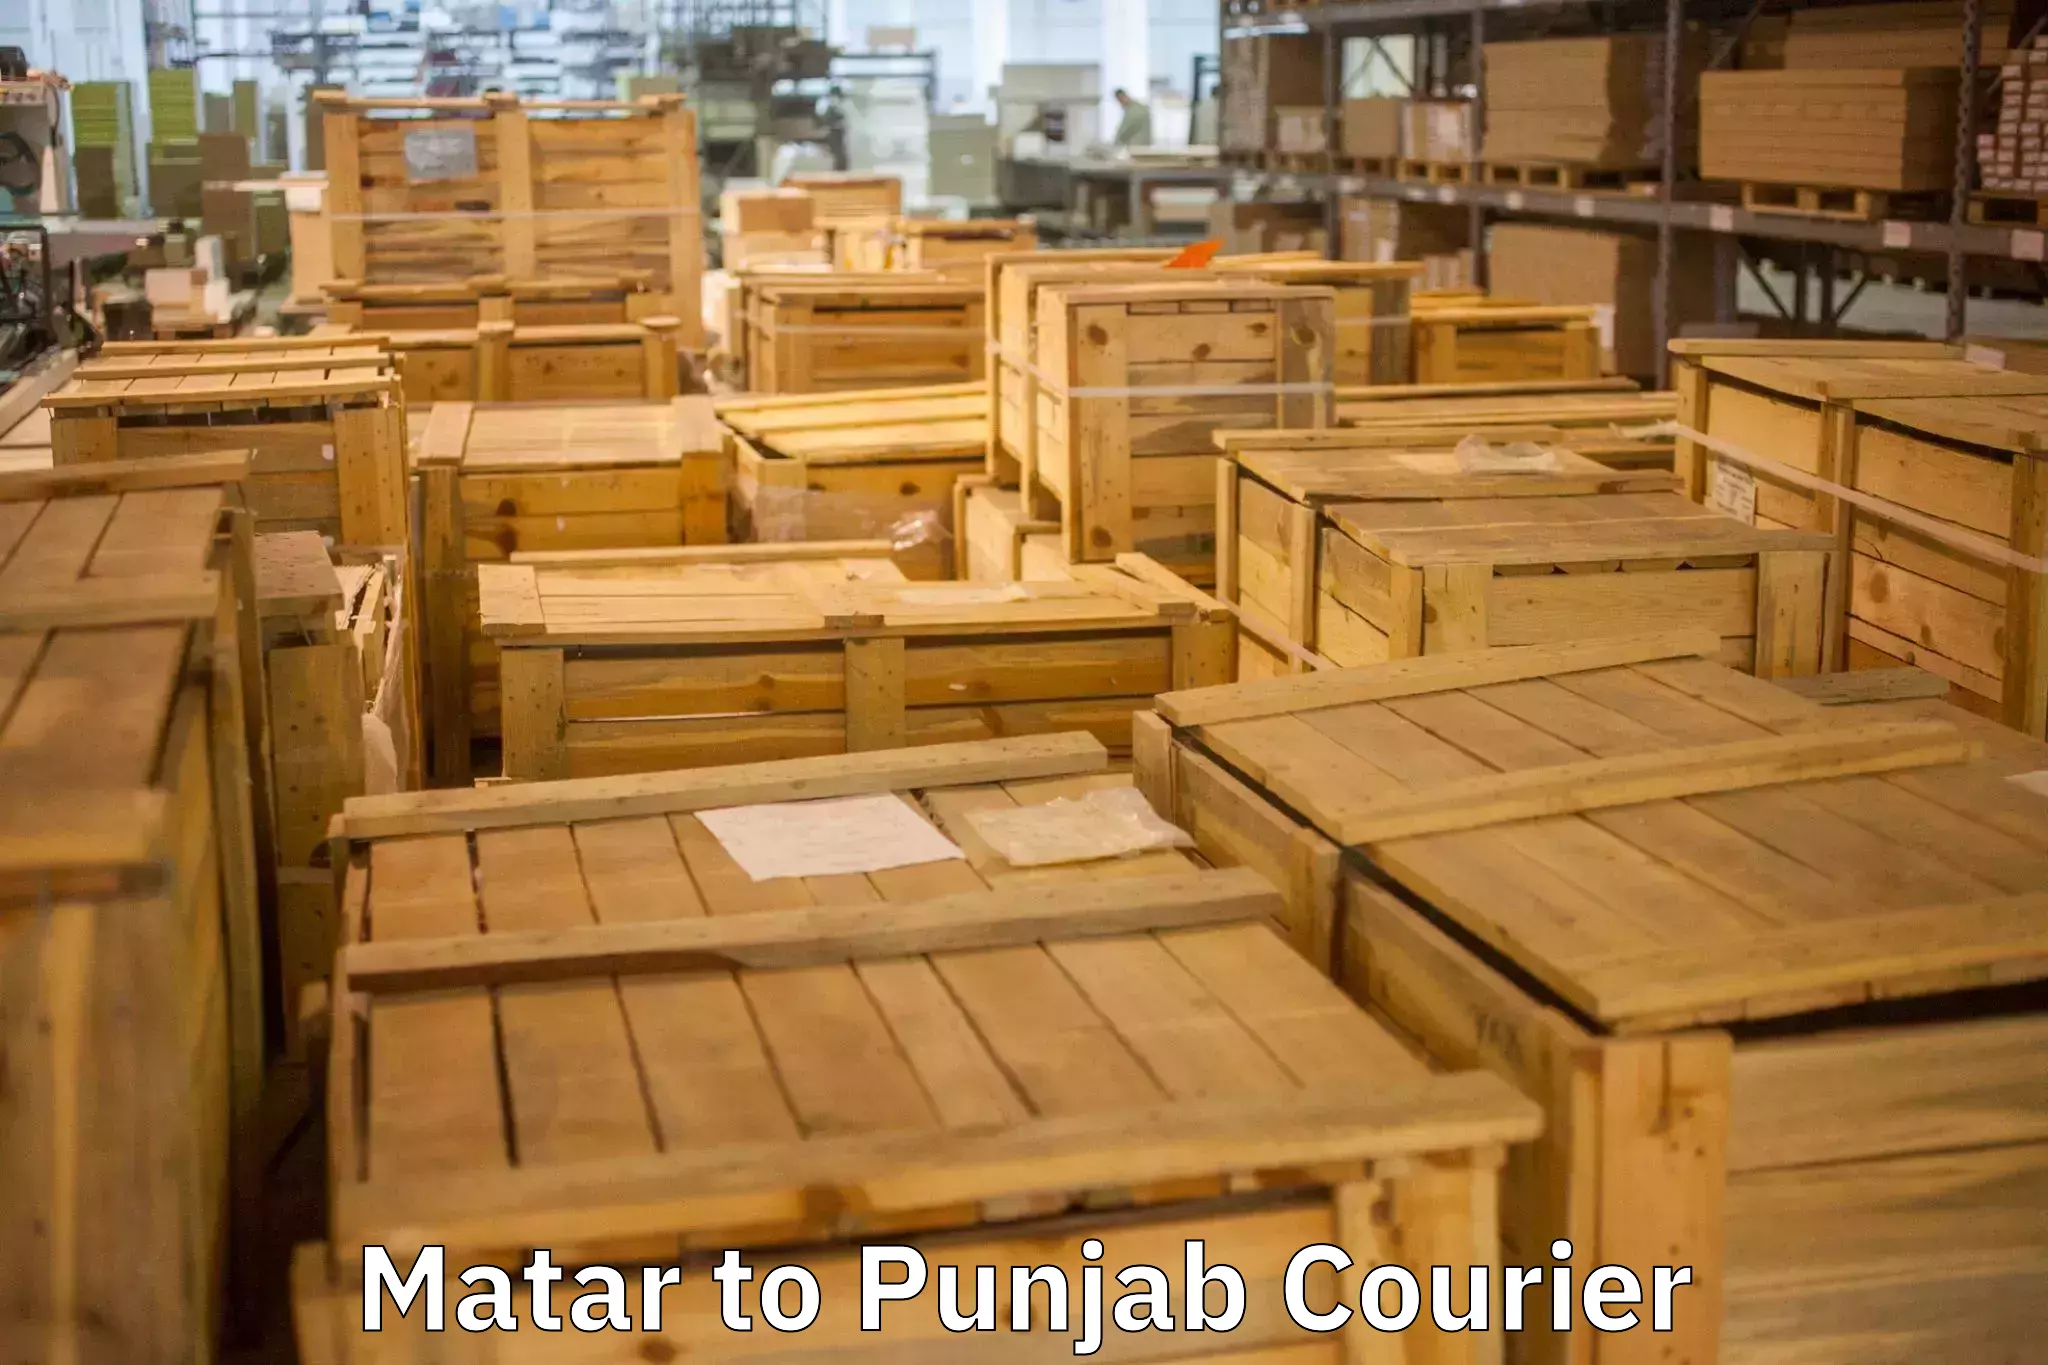 Efficient moving company Matar to Punjab